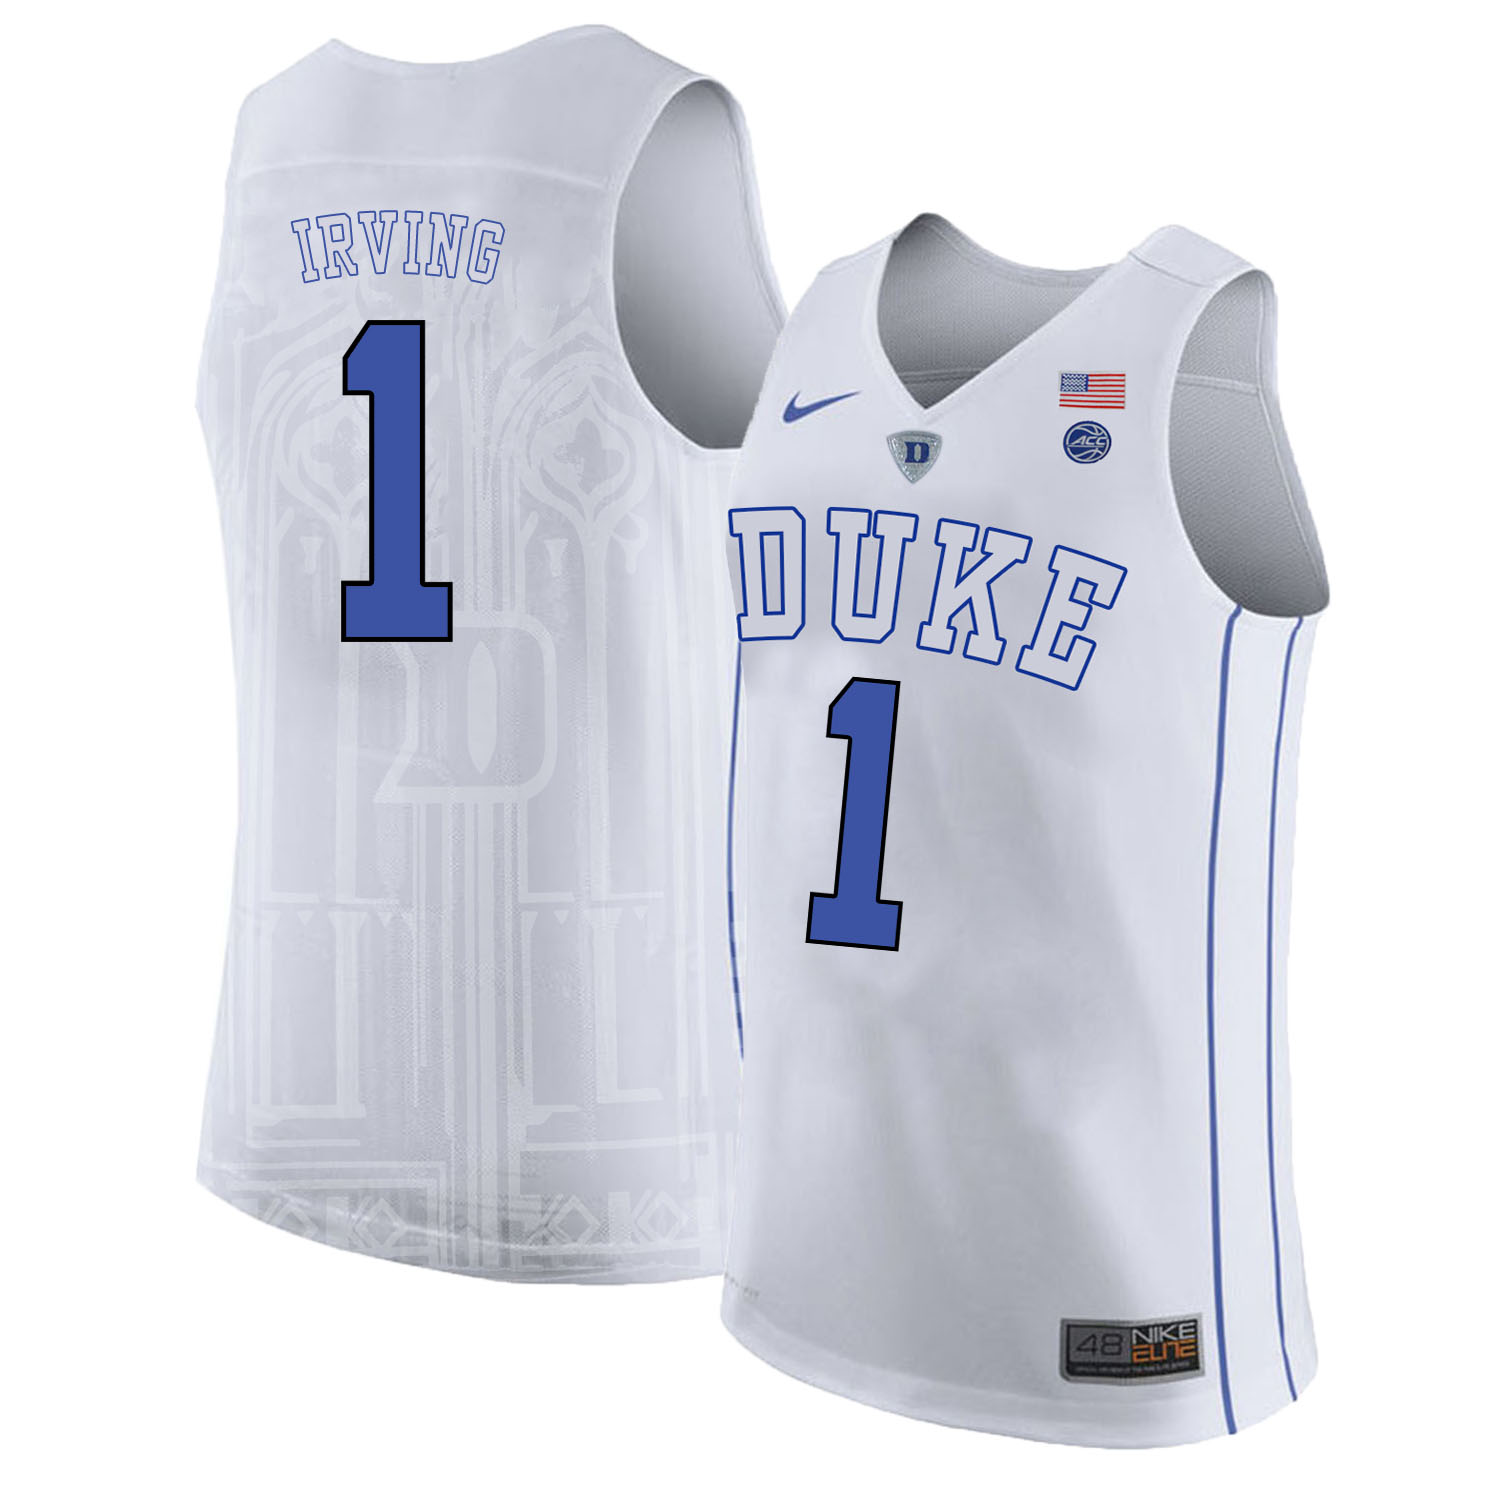 Duke Blue Devils 1 Kyrie Irving White Nike College Basketabll Jersey